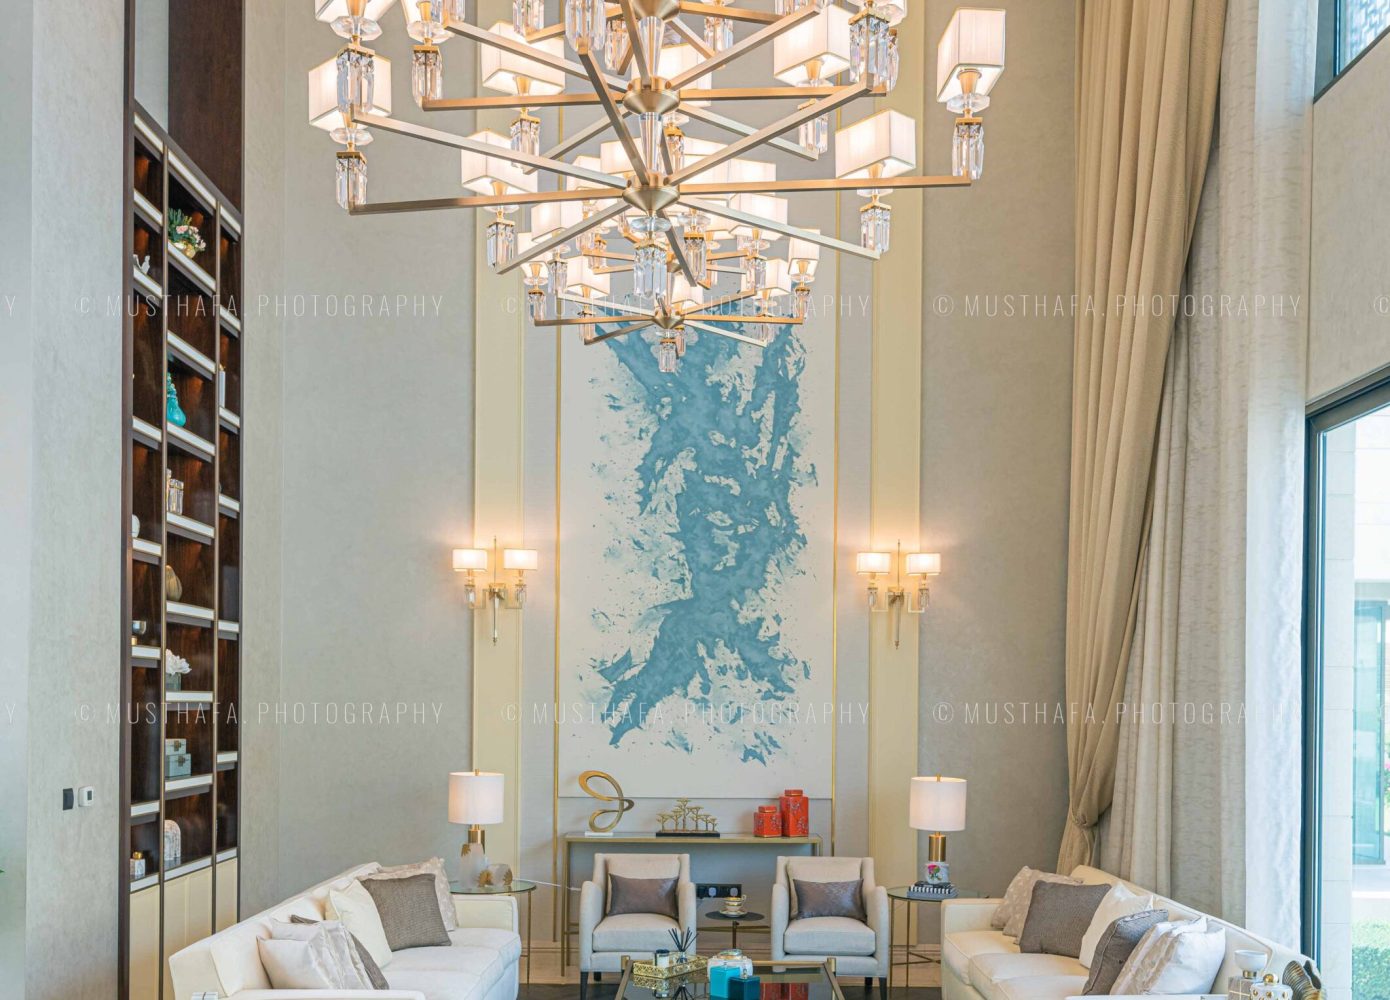 Dubai Villa Interior Photographer UAE Photography Fit Out chandelier ceiling lighting installation 03